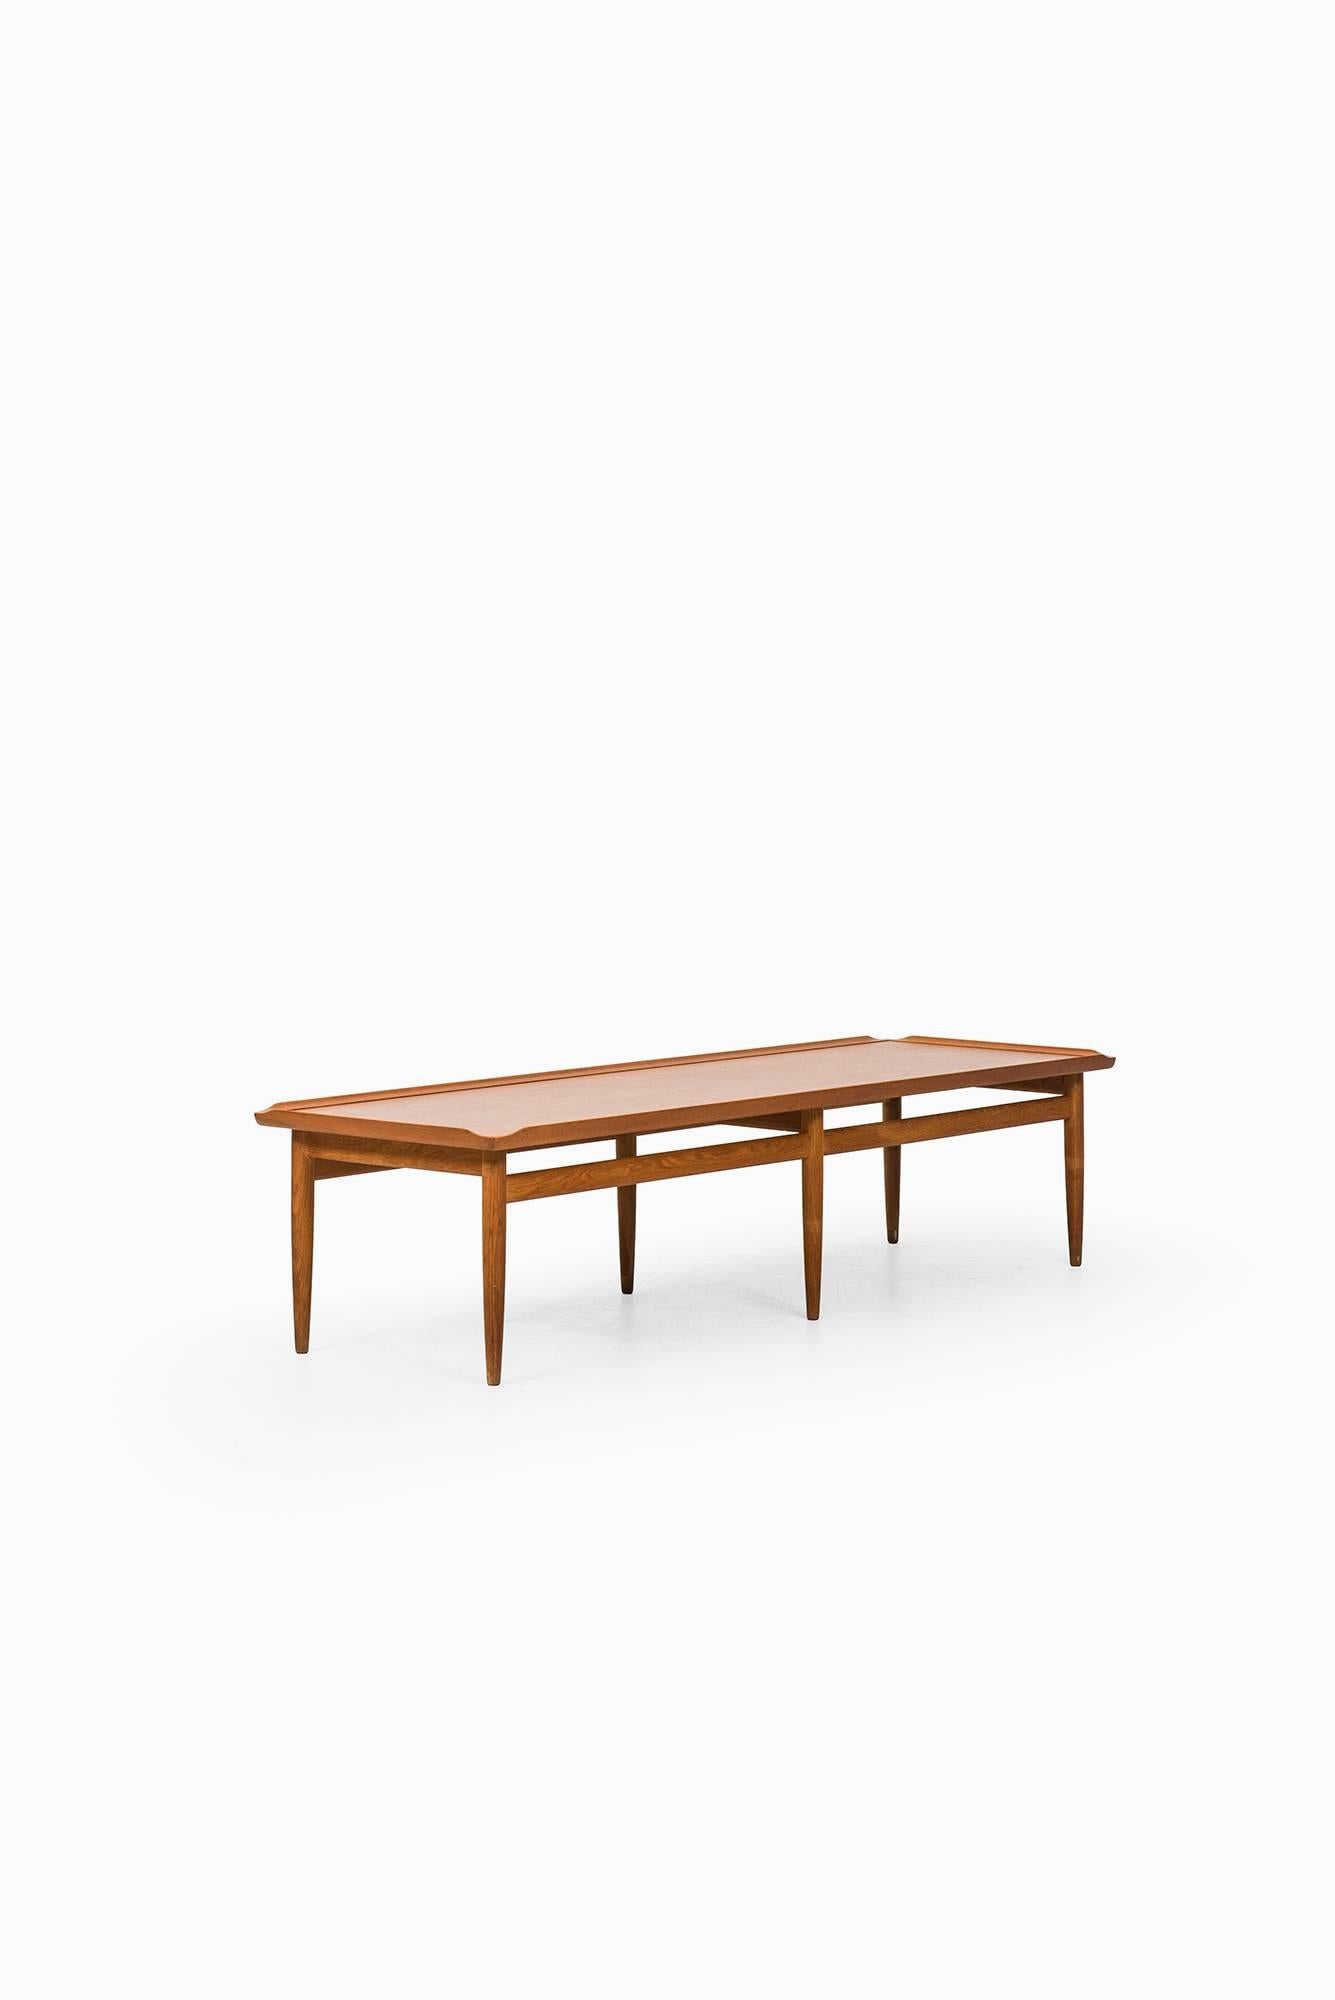 Rare side table designed by Kurt Østervig. Produced by Jason Møbler in Denmark.